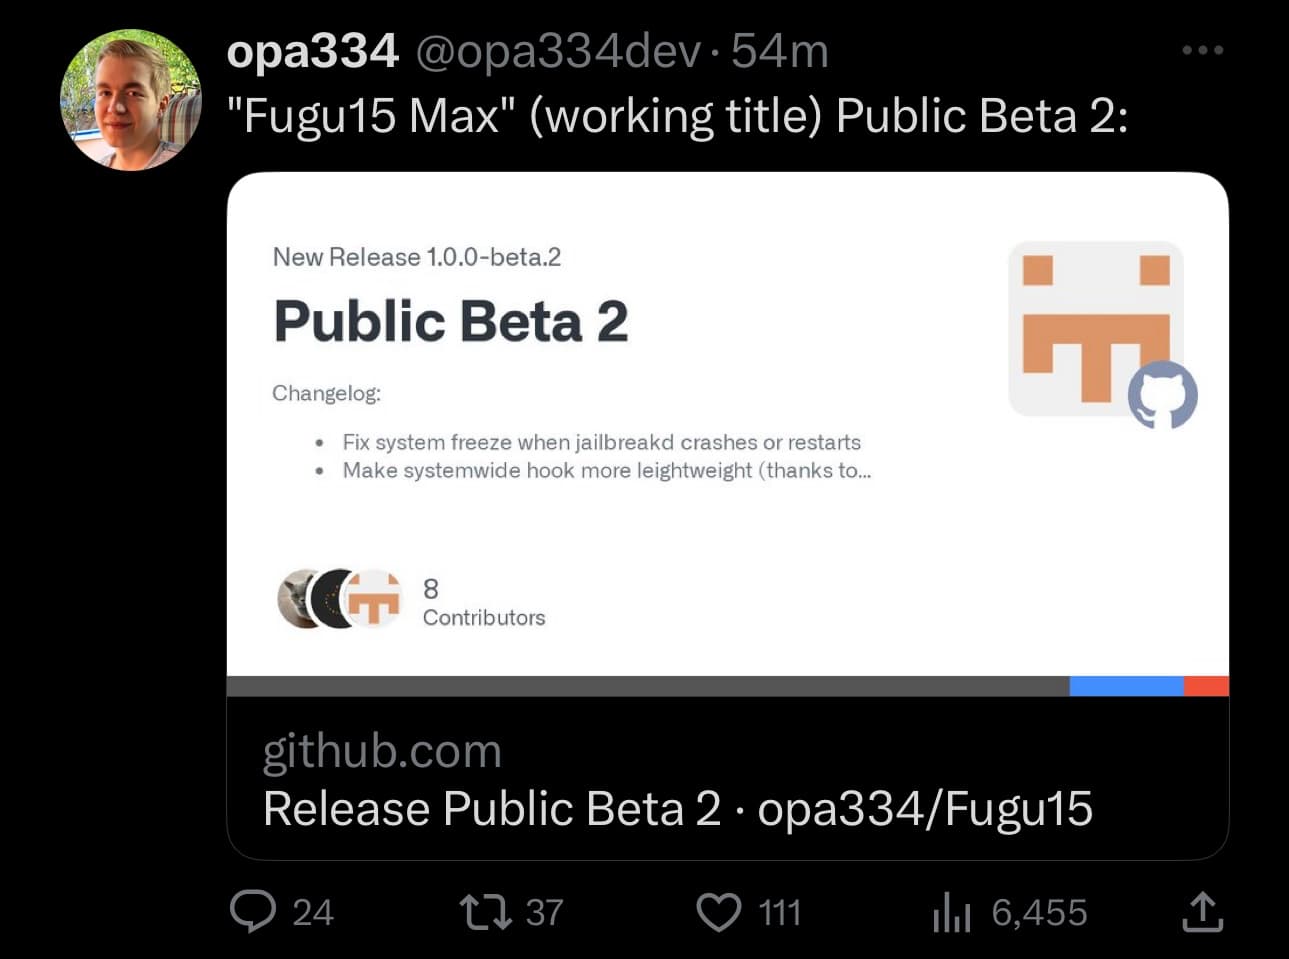 Opa334 seeds second public beta of Fugu15 Max jailbreak.